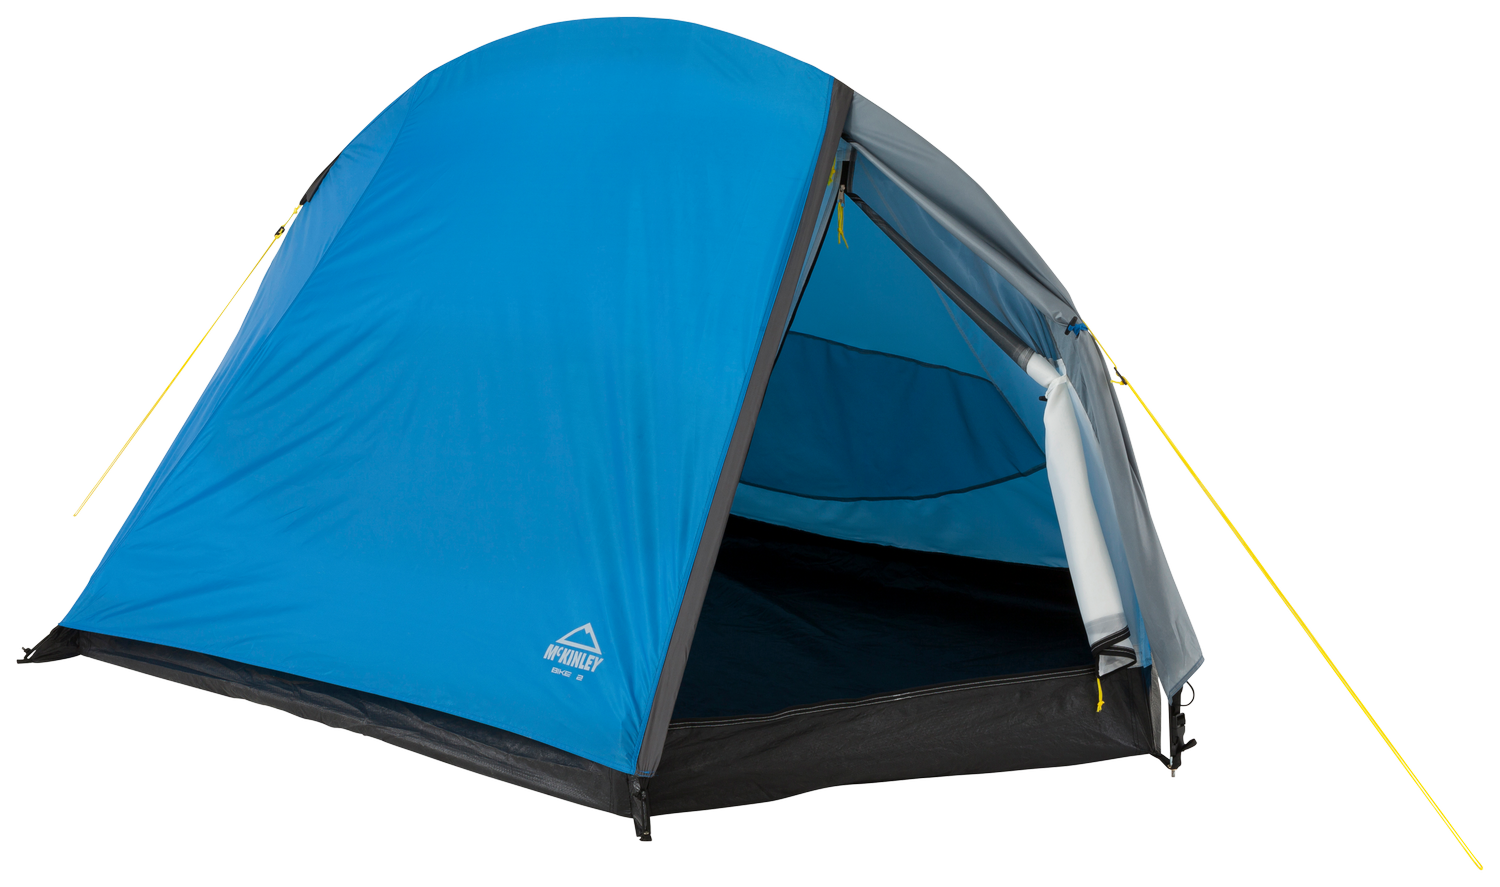 Mini Tent